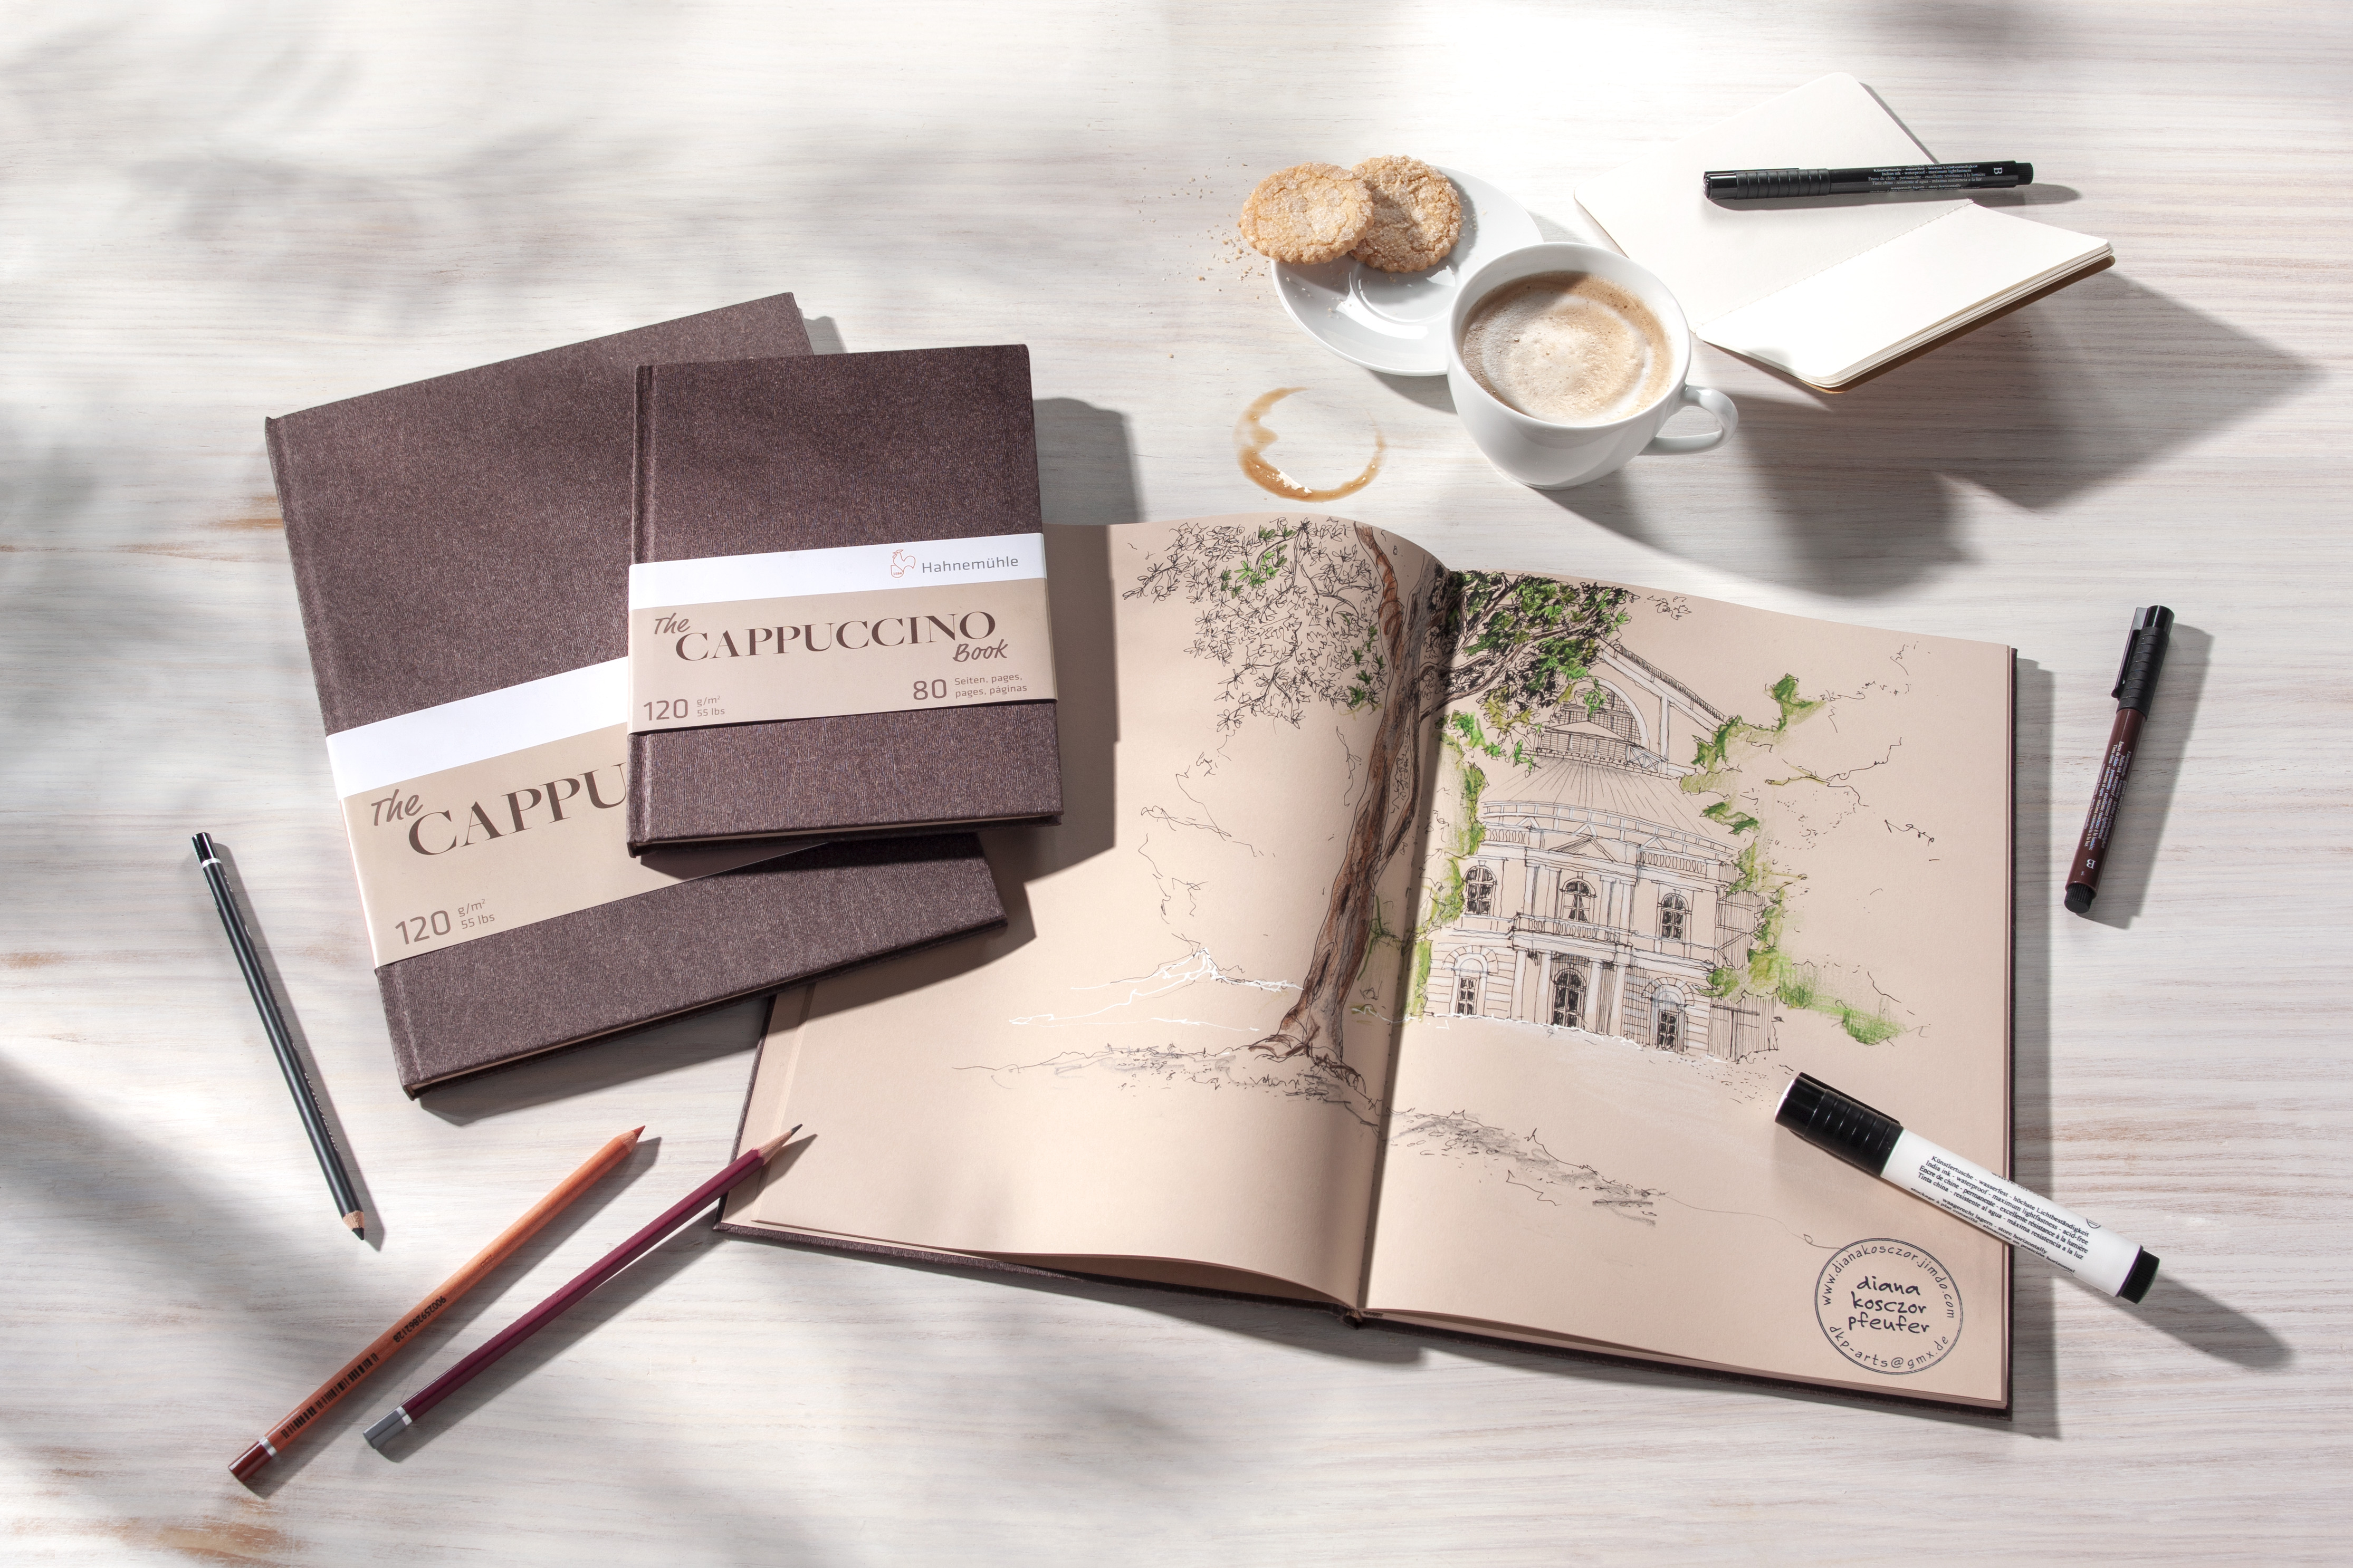 The Grey Book & The Cappuccino Book